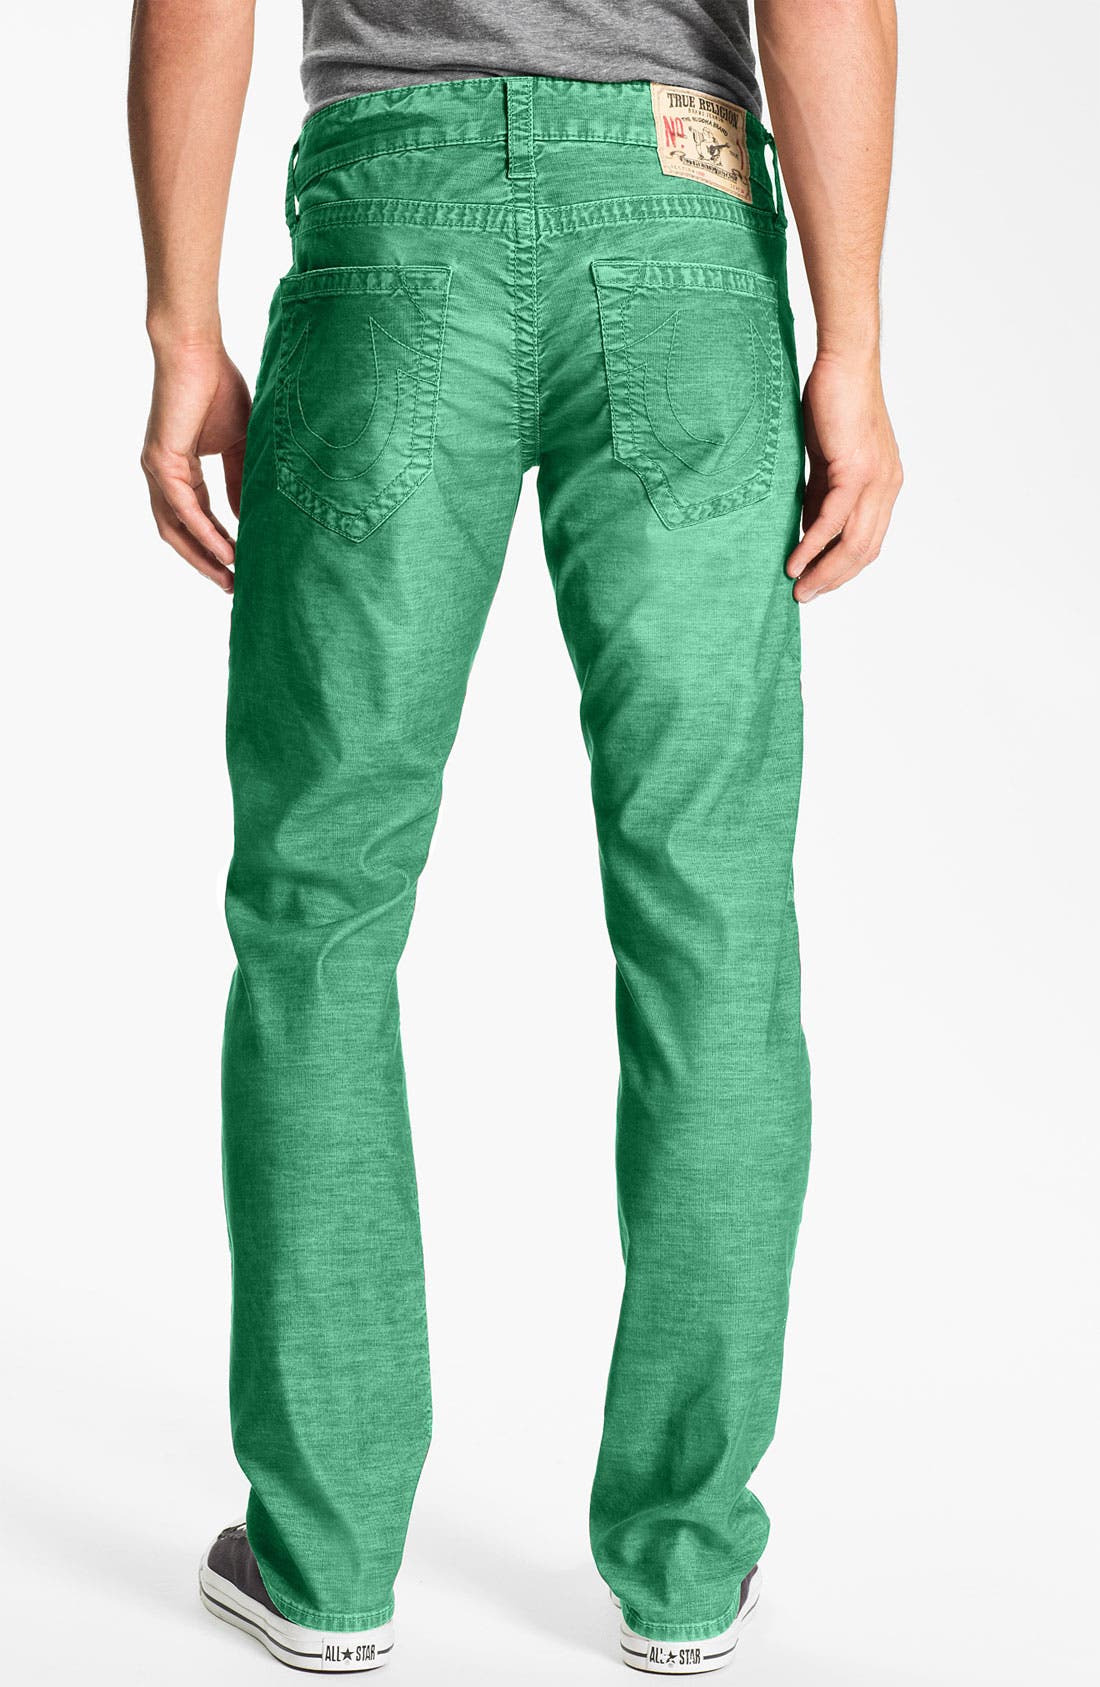 green true religion jeans